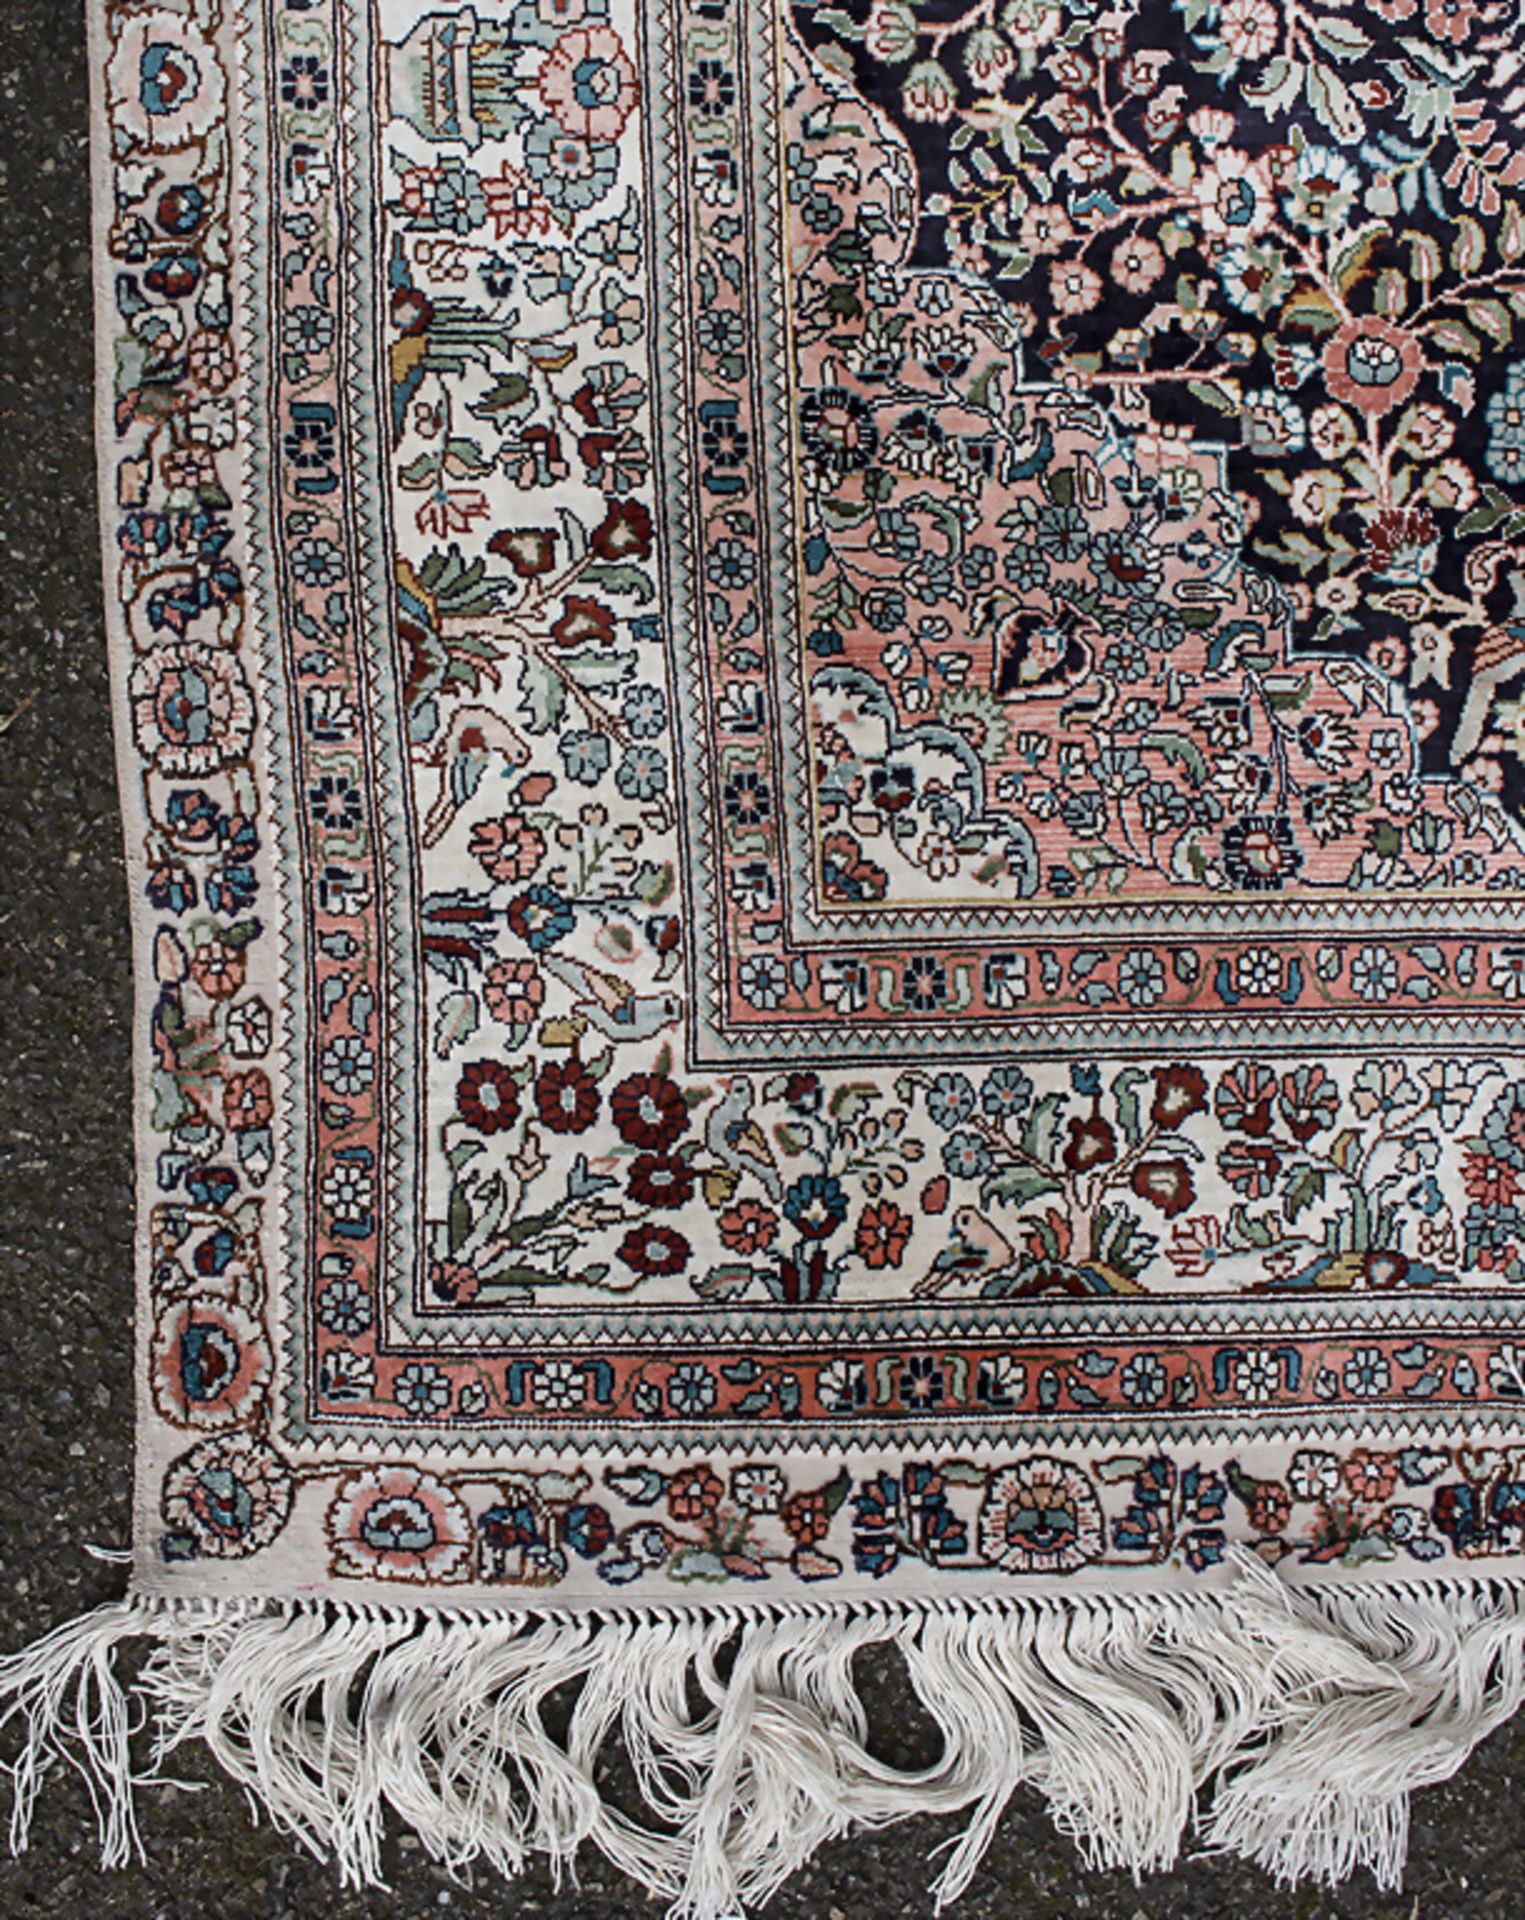 Seidenteppich / A silk carpet - Image 2 of 3